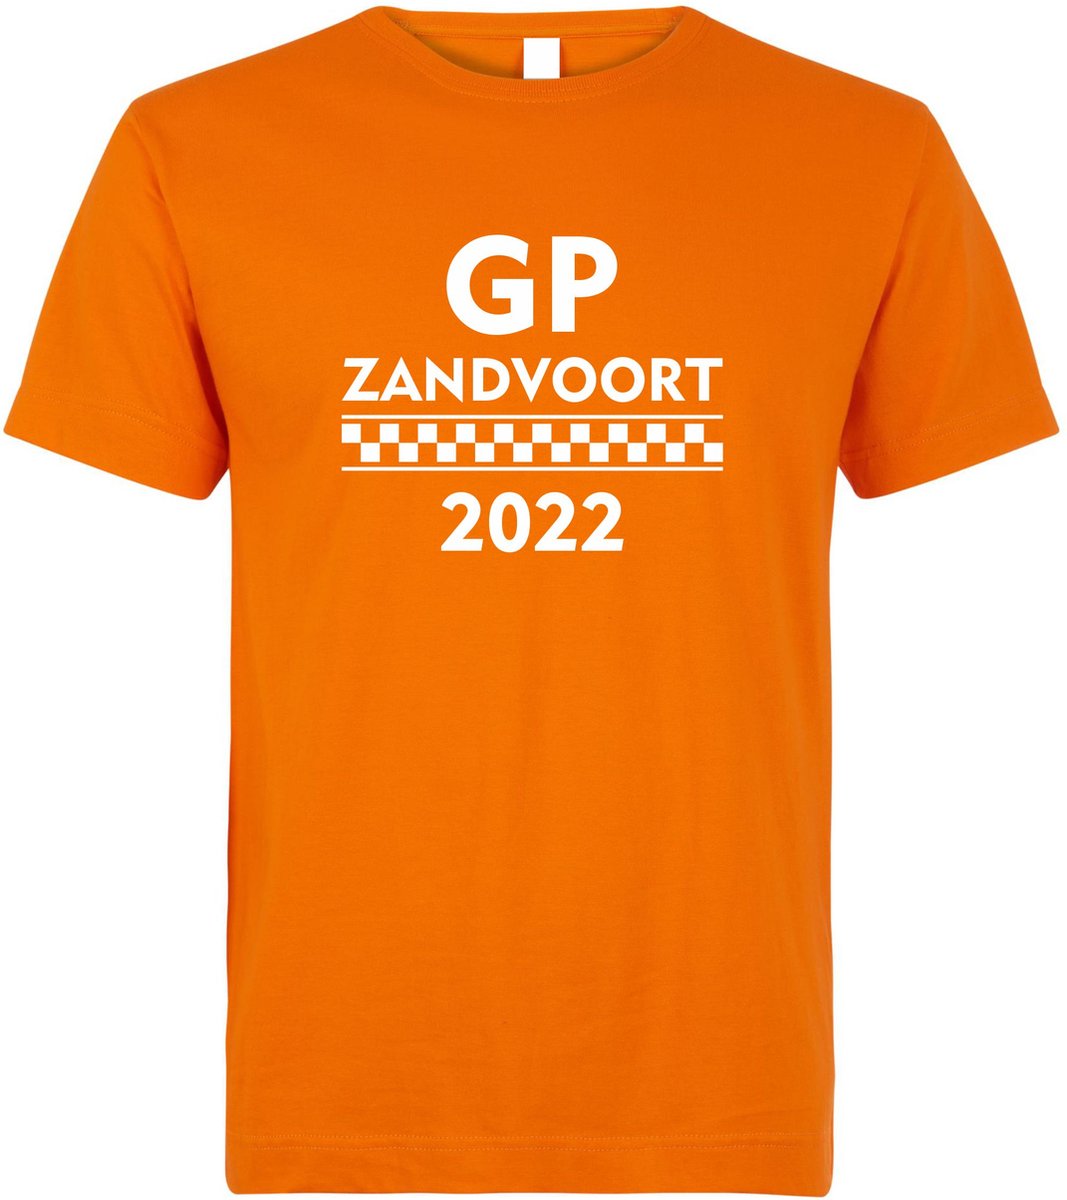 T-shirt GP Zandvoort 2022 | Max Verstappen / Red Bull Racing / Formule 1 fan | Grand Prix Circuit Zandvoort | kleding shirt | Oranje | maat XS